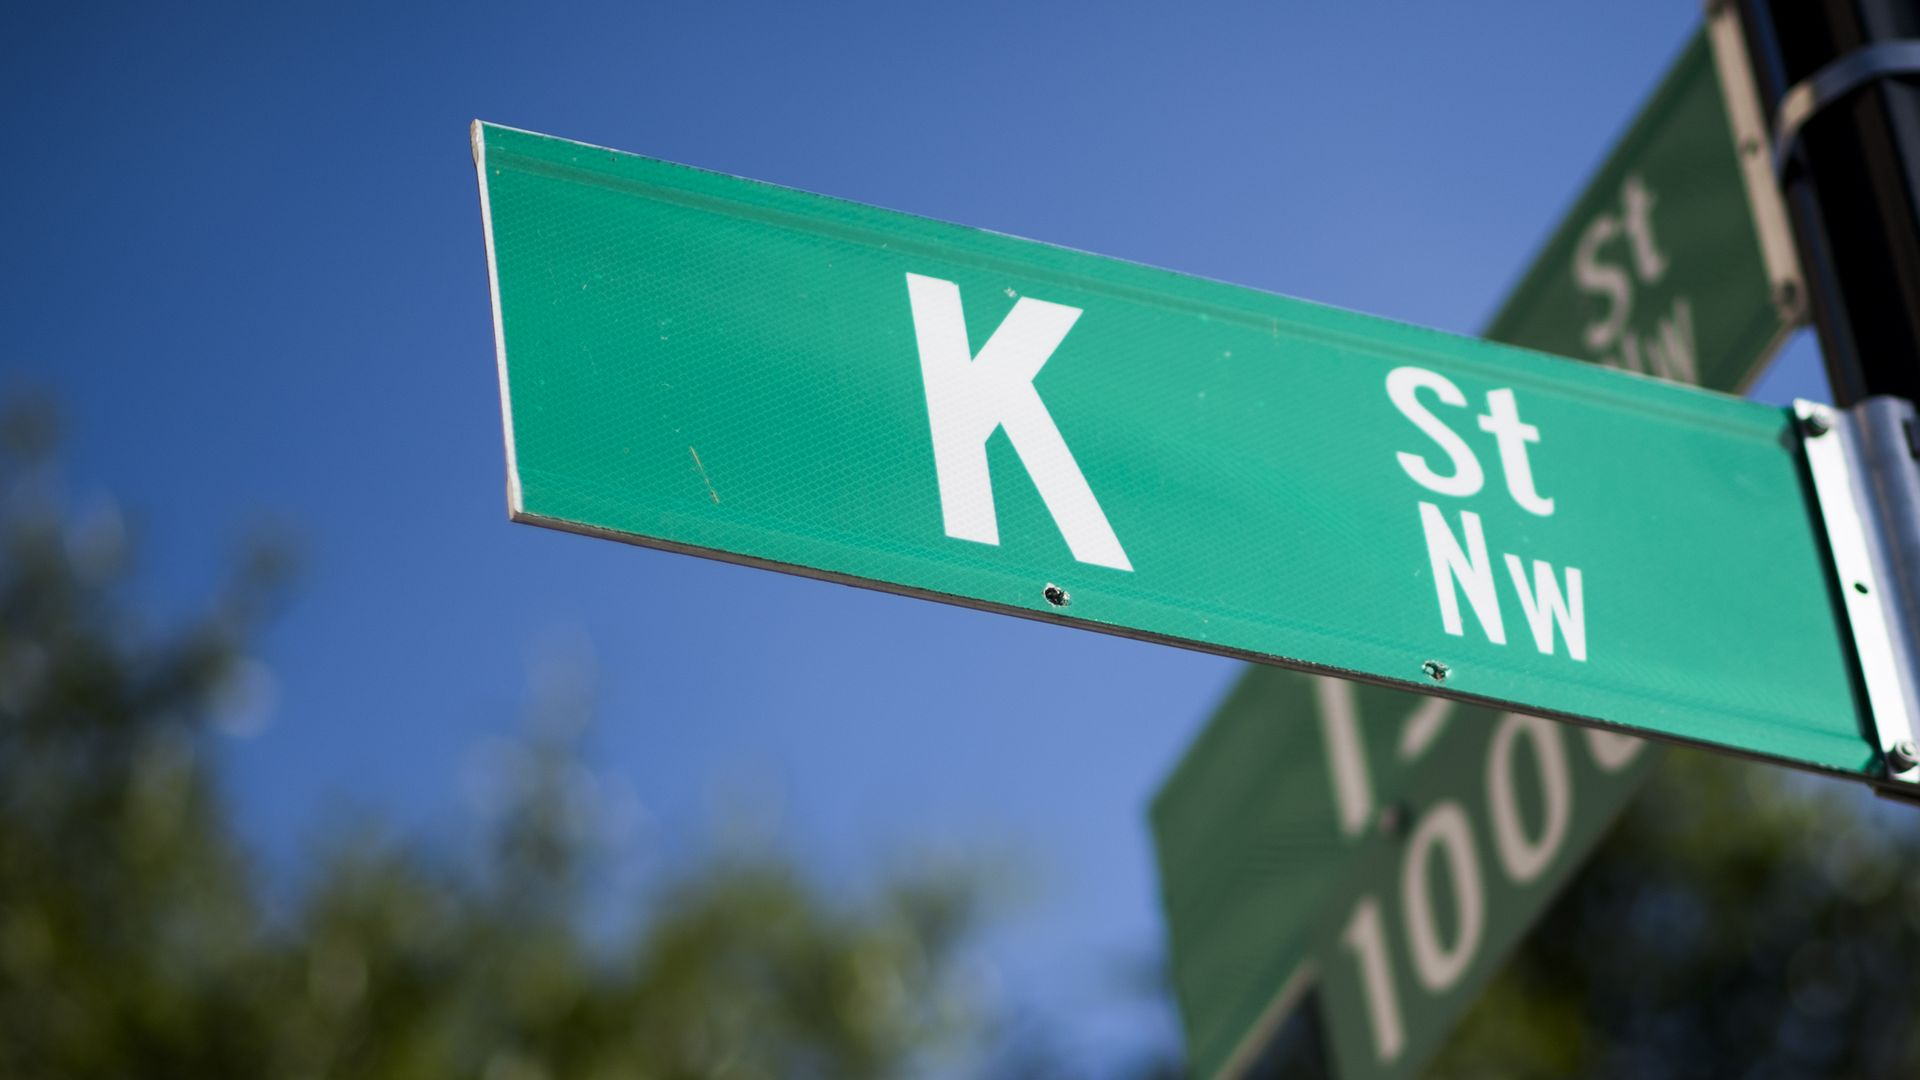 Street sign for K Street in Washington, DC